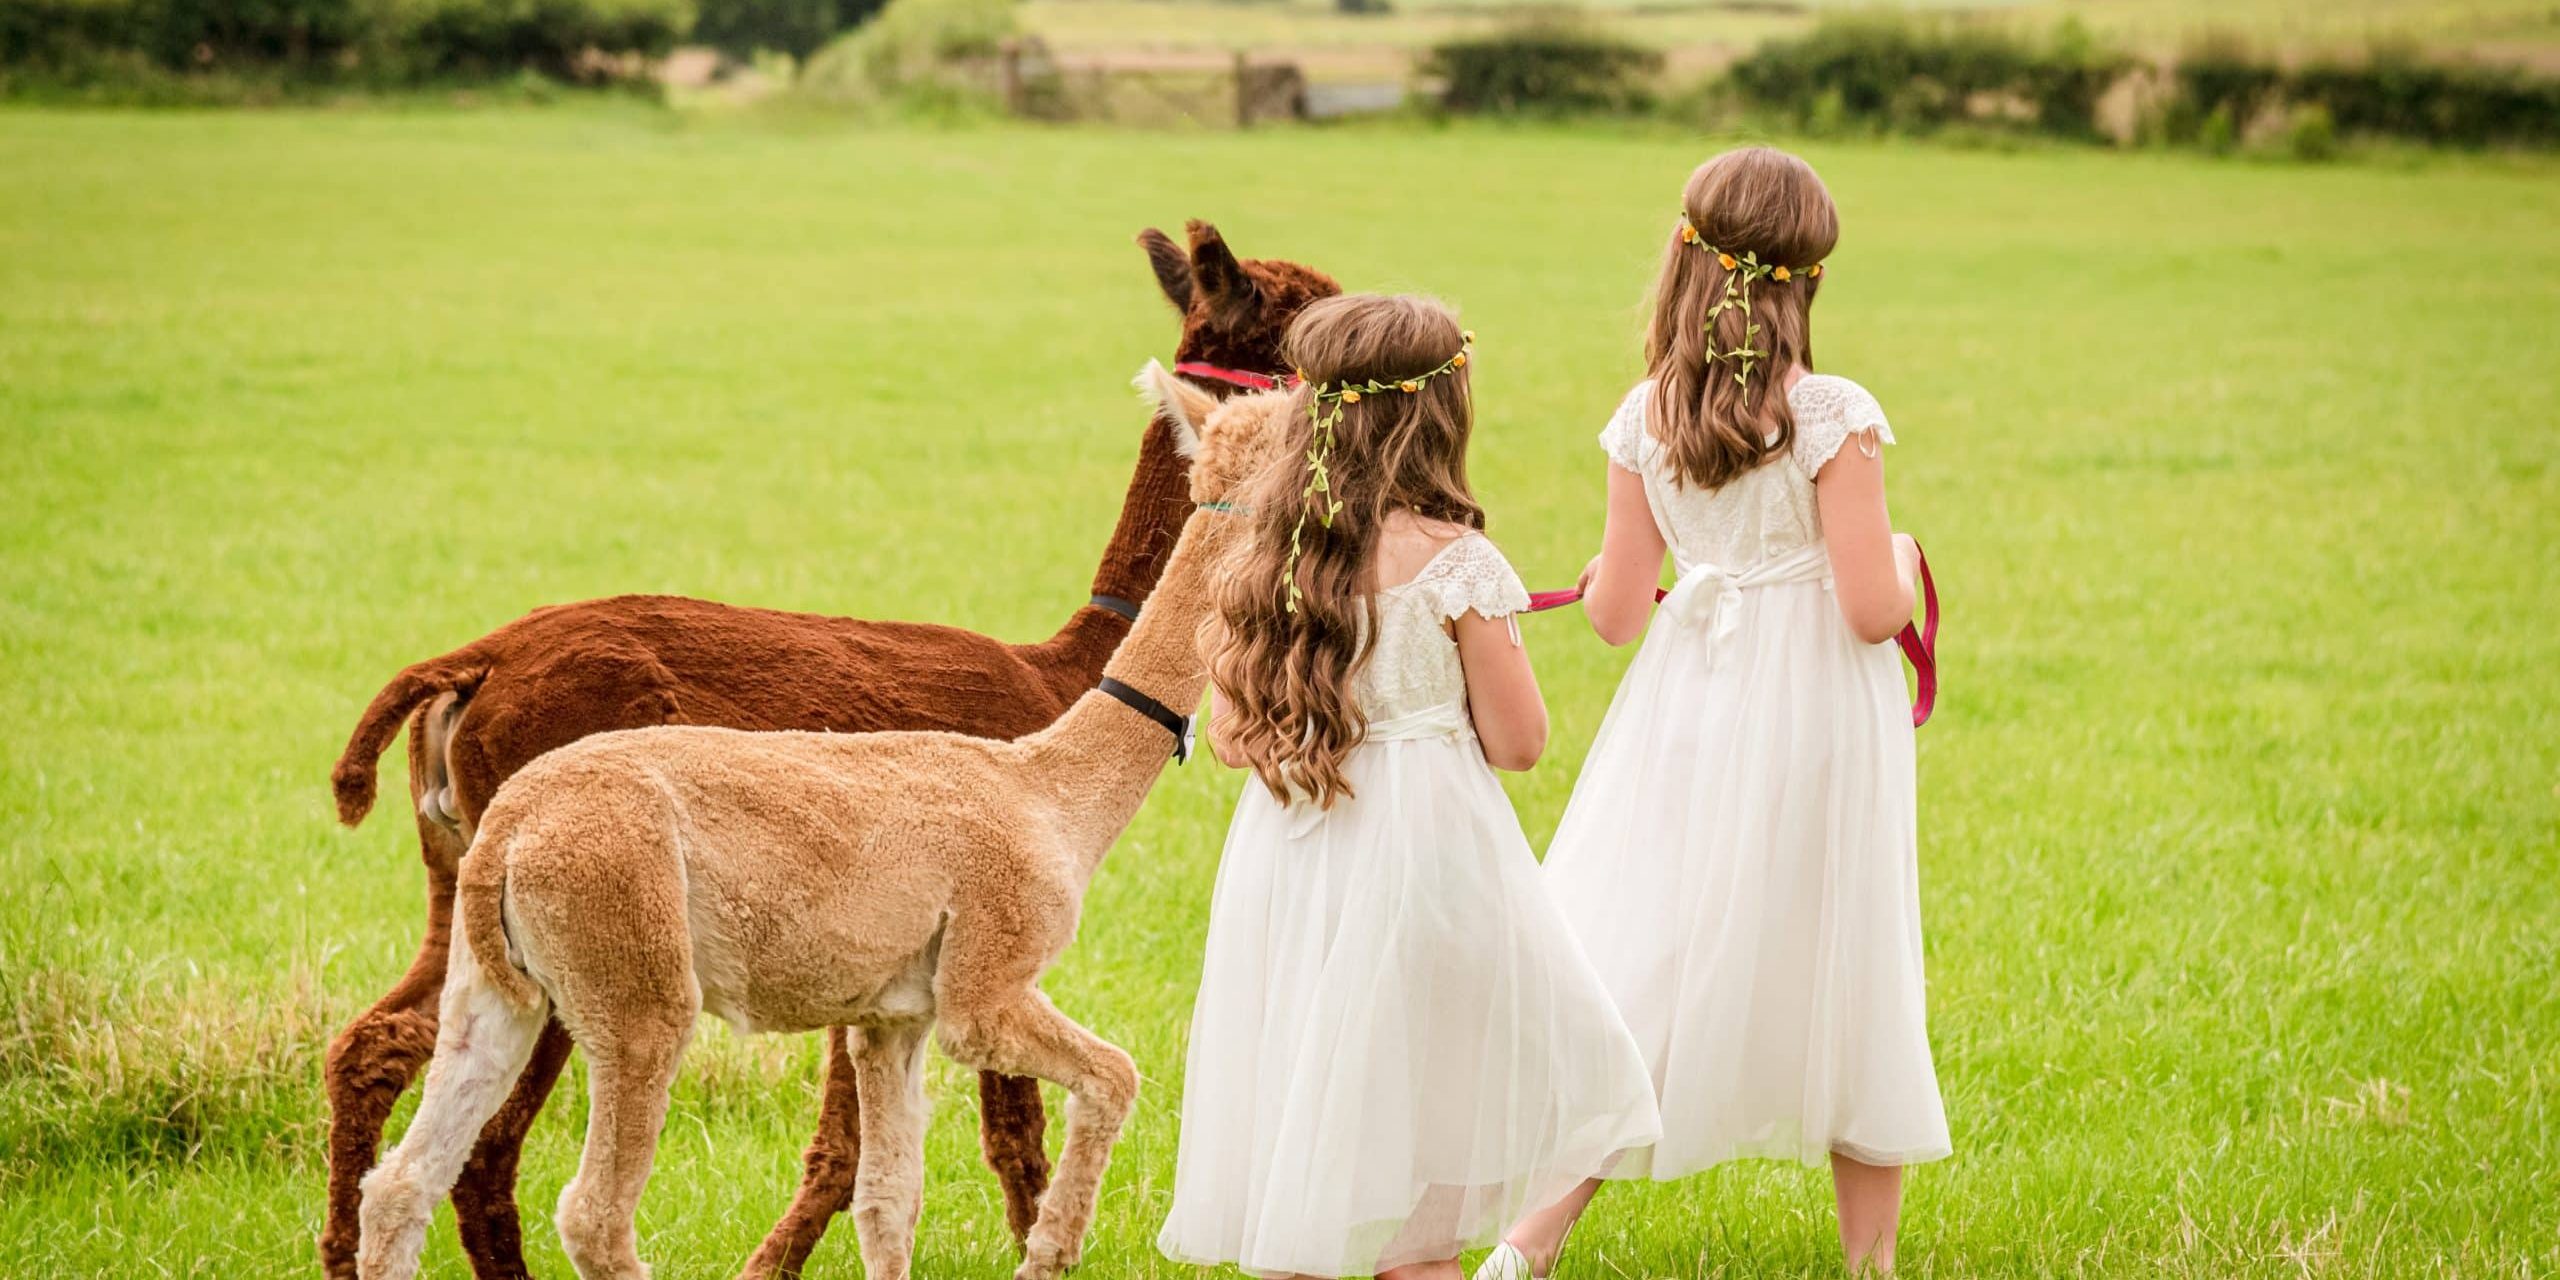 bridesmaids-taking-two-alpaca-for-a-walk-at-a-wedd-2022-11-09-14-24-48-utc